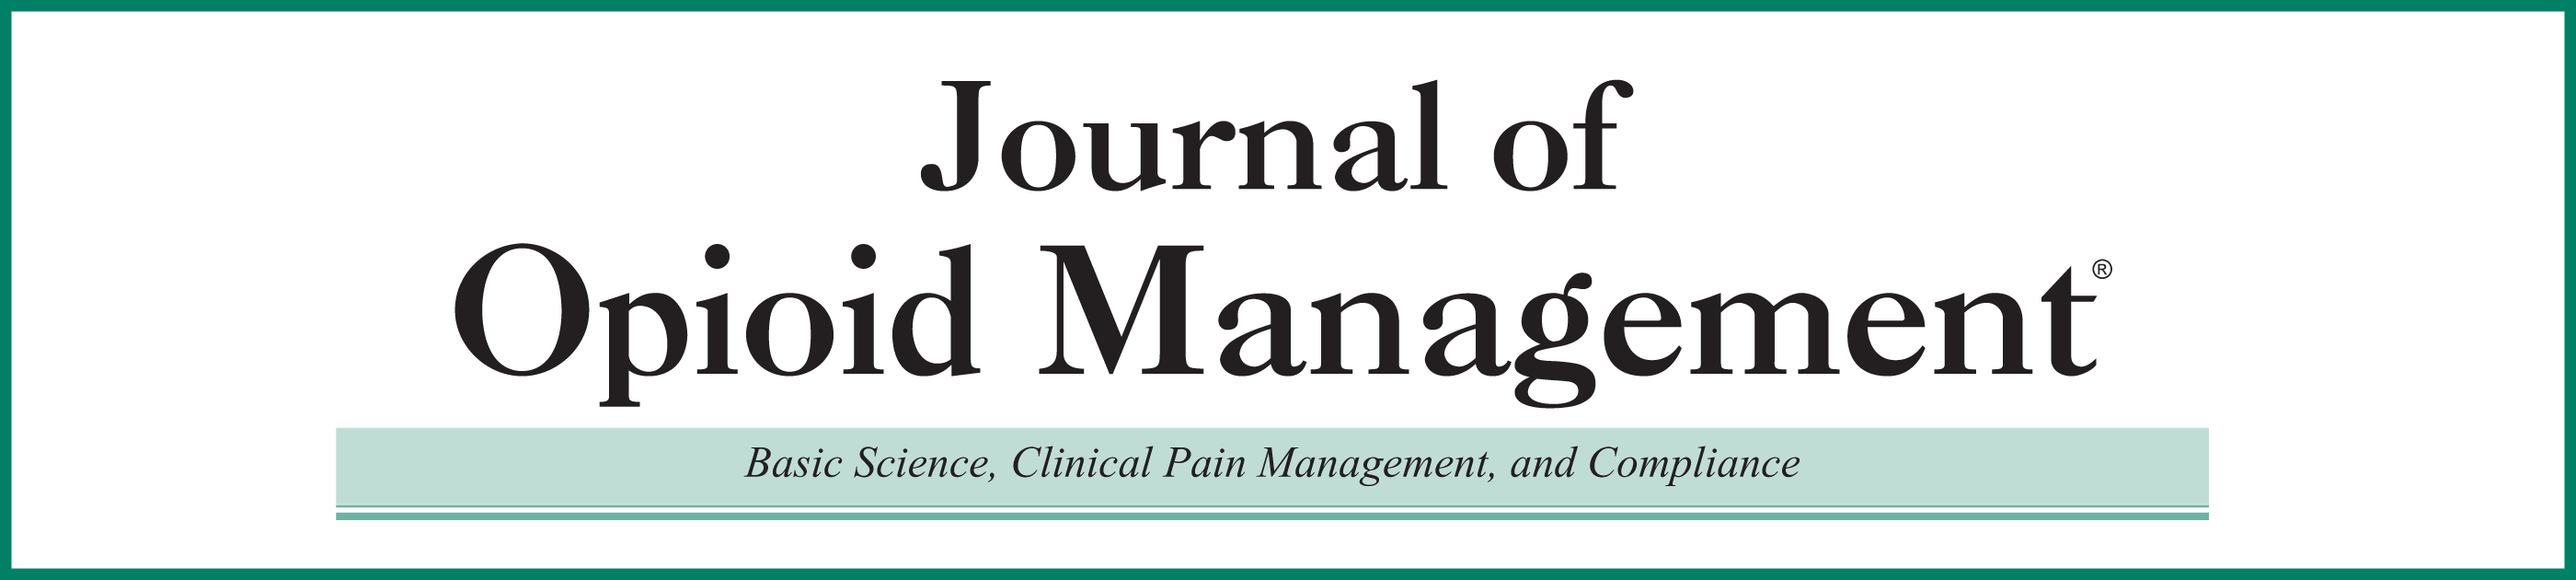 Journal of Opioid Management Logo